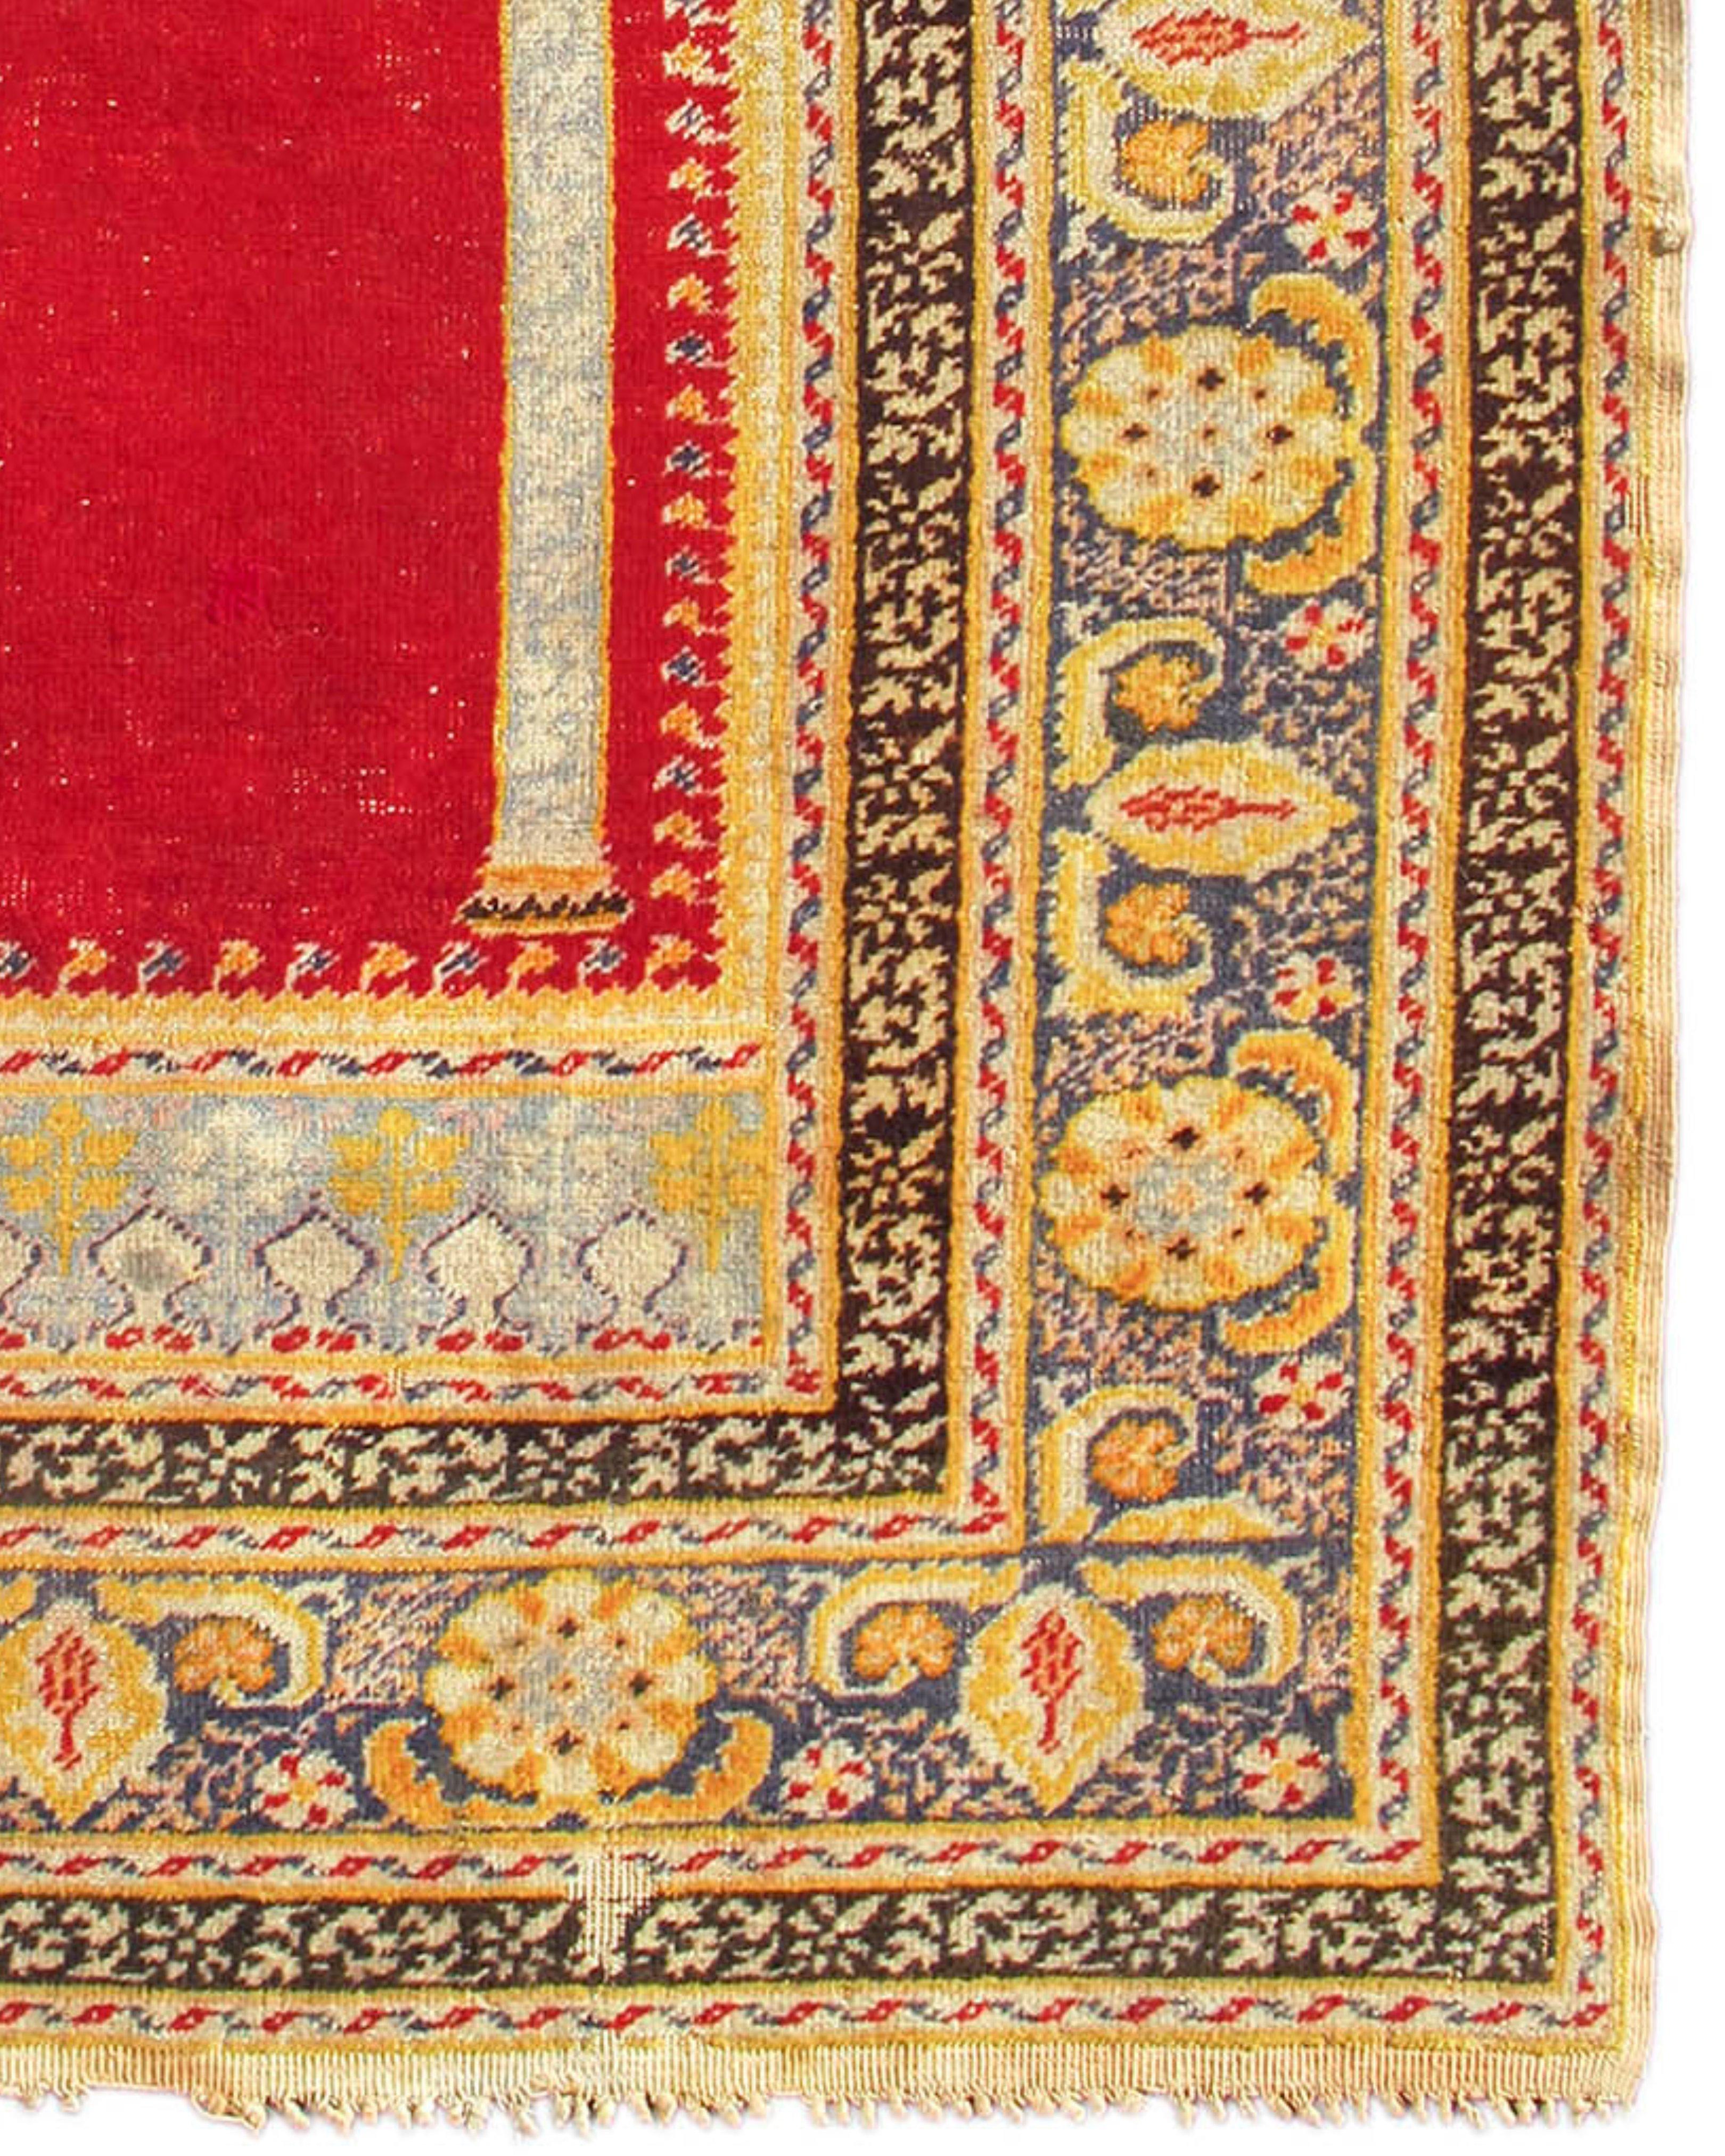 Wool Antique Turkish Ghiordes Prayer Rug, Late 19th Century For Sale